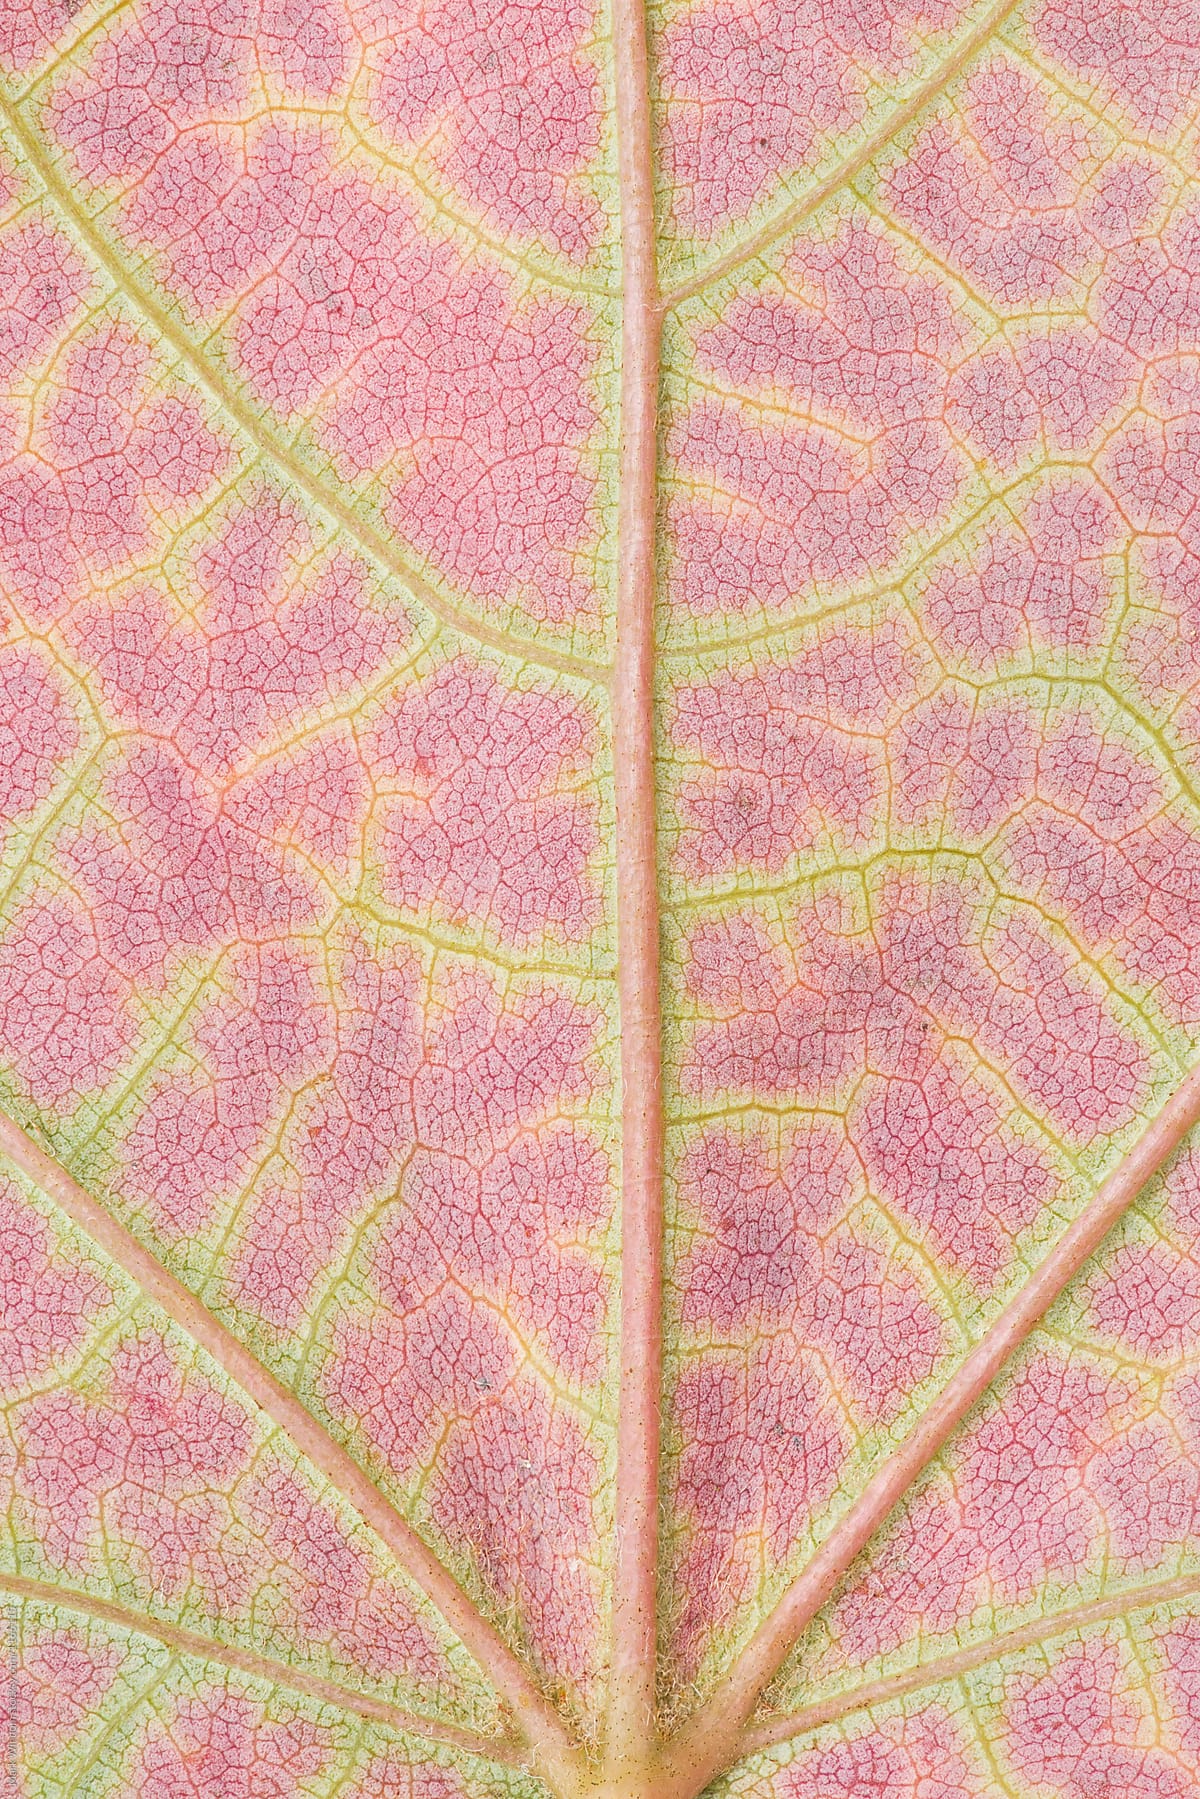 Maple leaf in Autumn, closeup